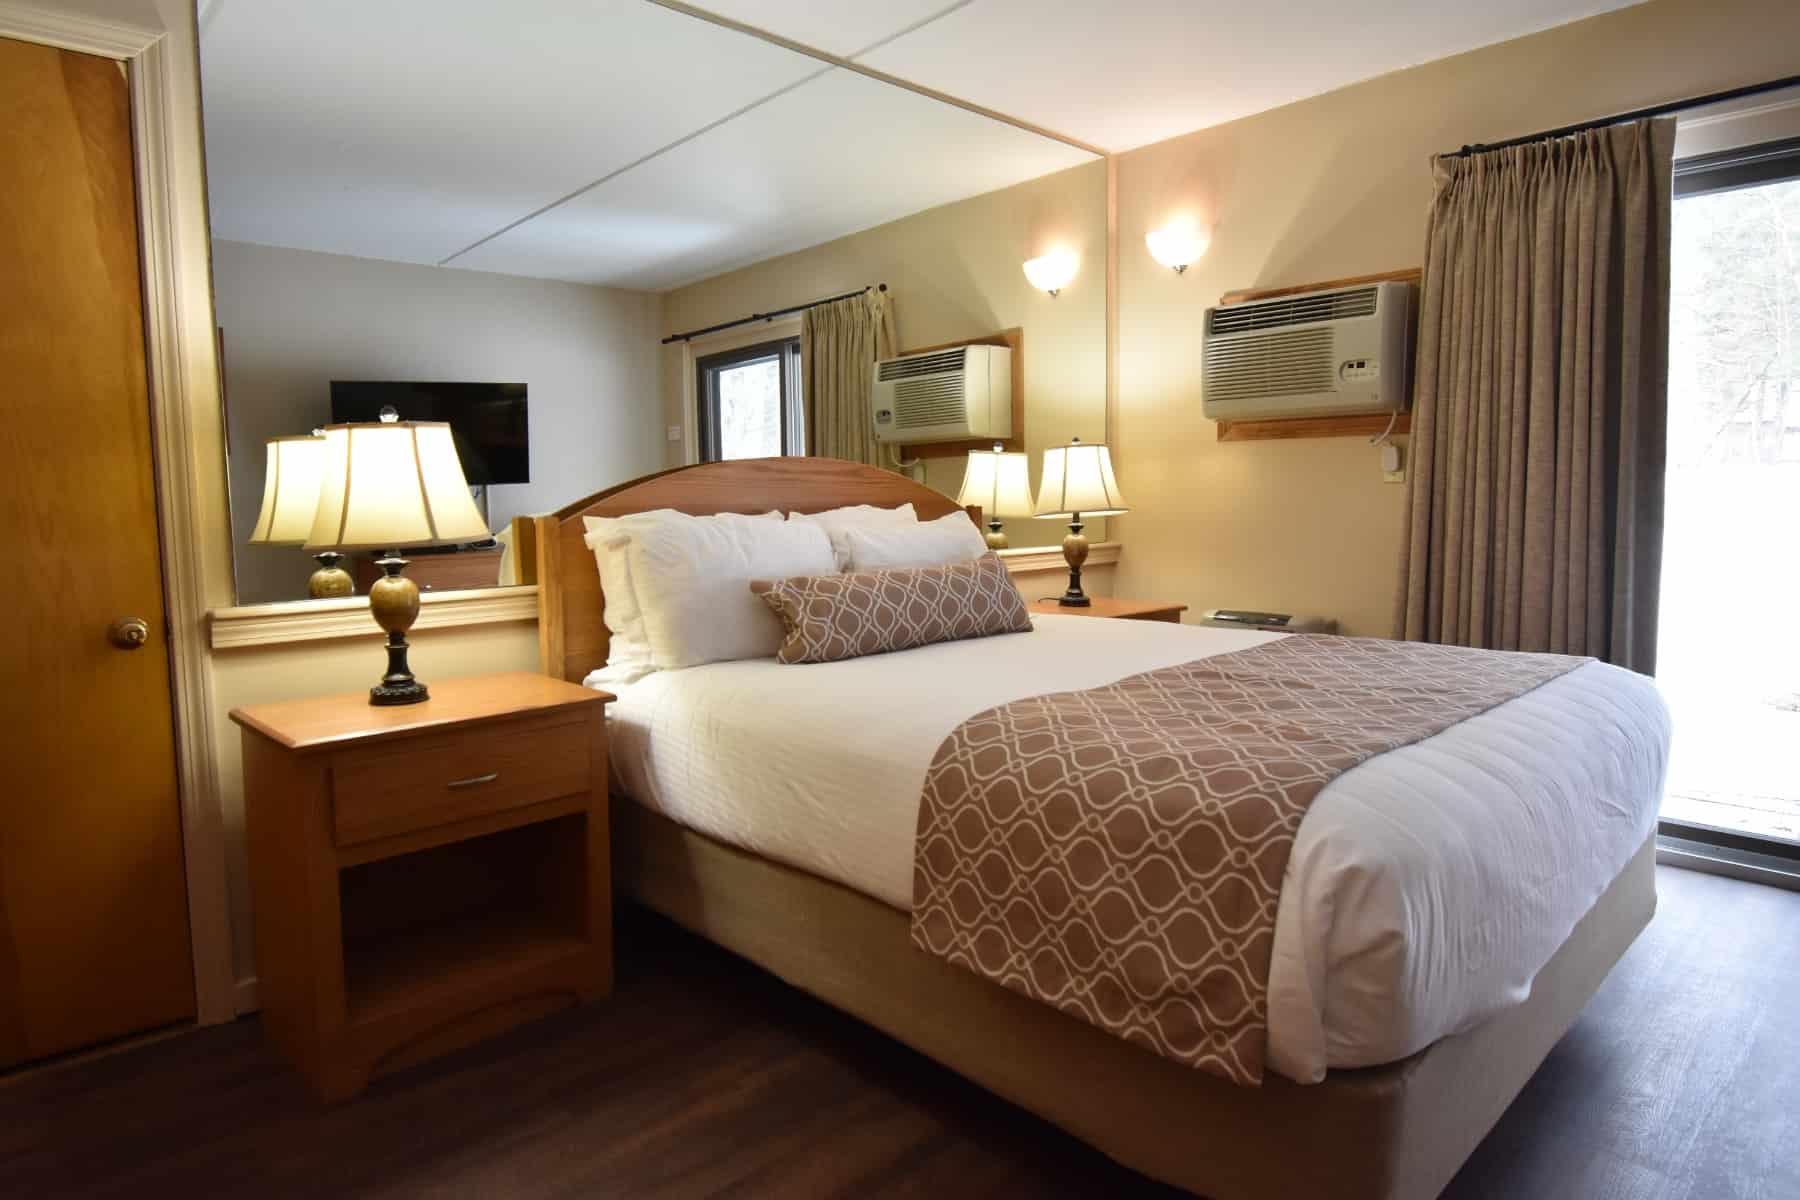 Standard Hotel room accommodations